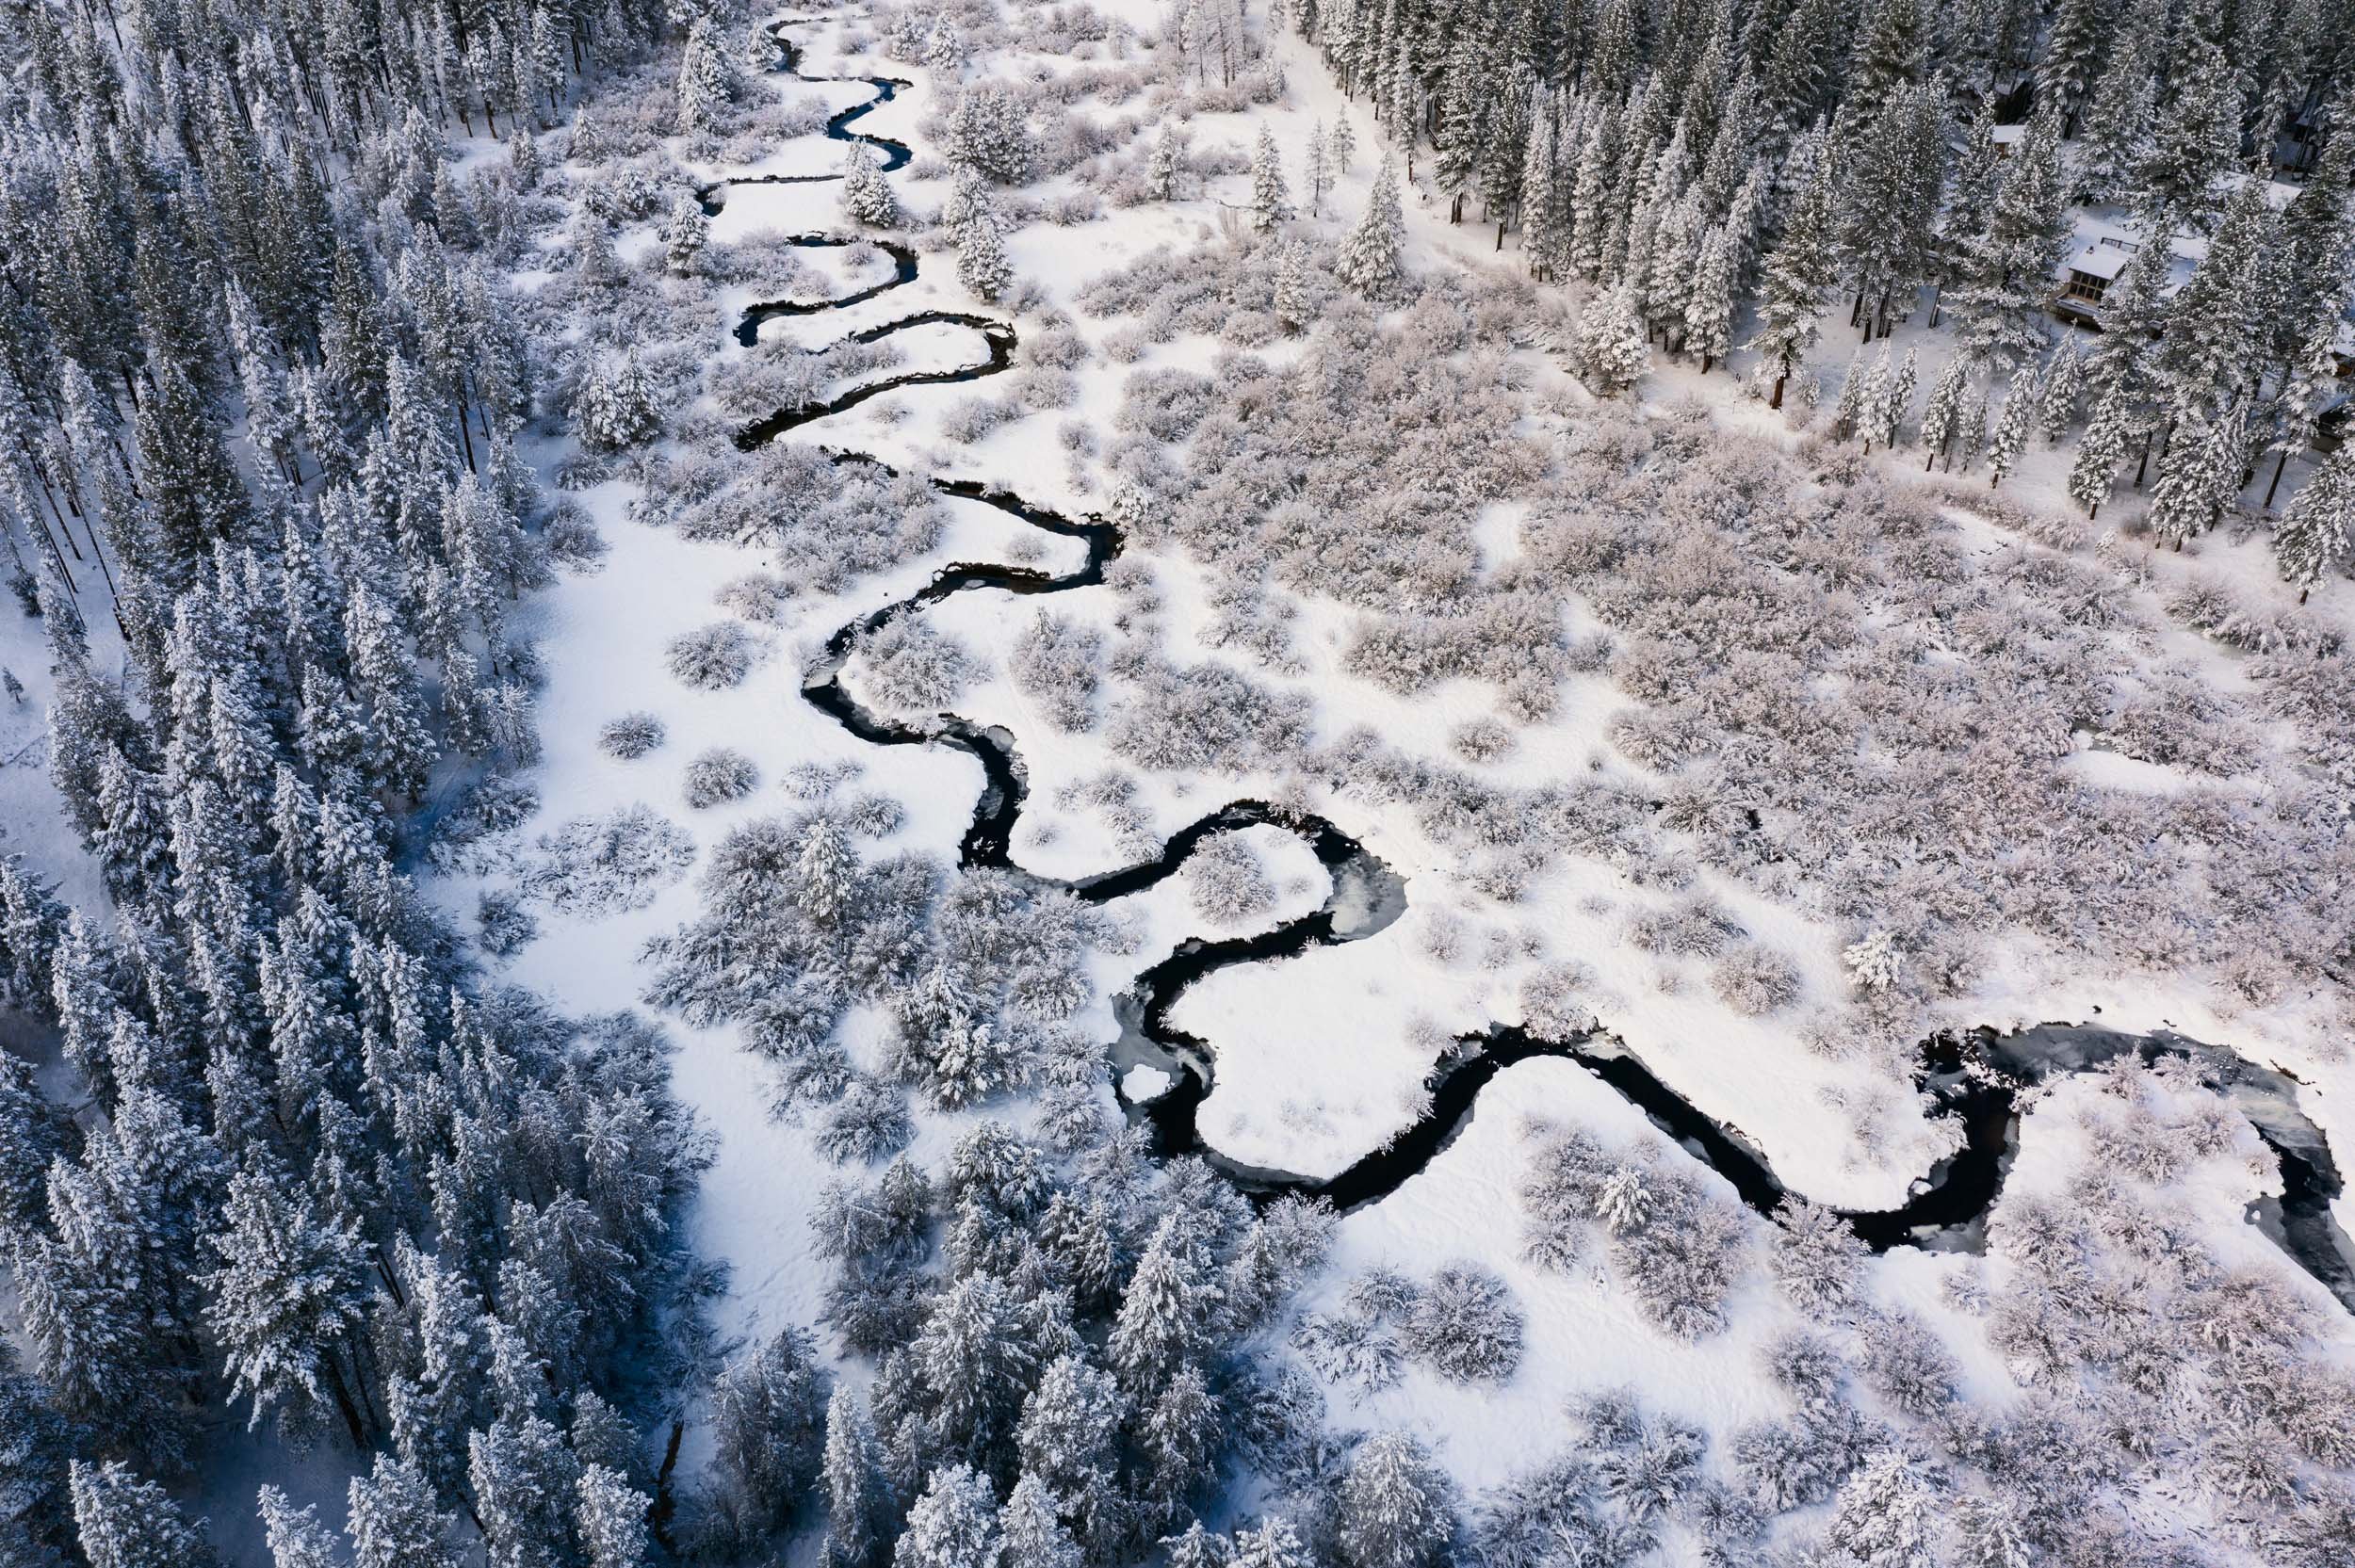 Jason_Bax_SQ_Landscape_Cold_Creek_Aerial_WinterDJI_0321.jpg